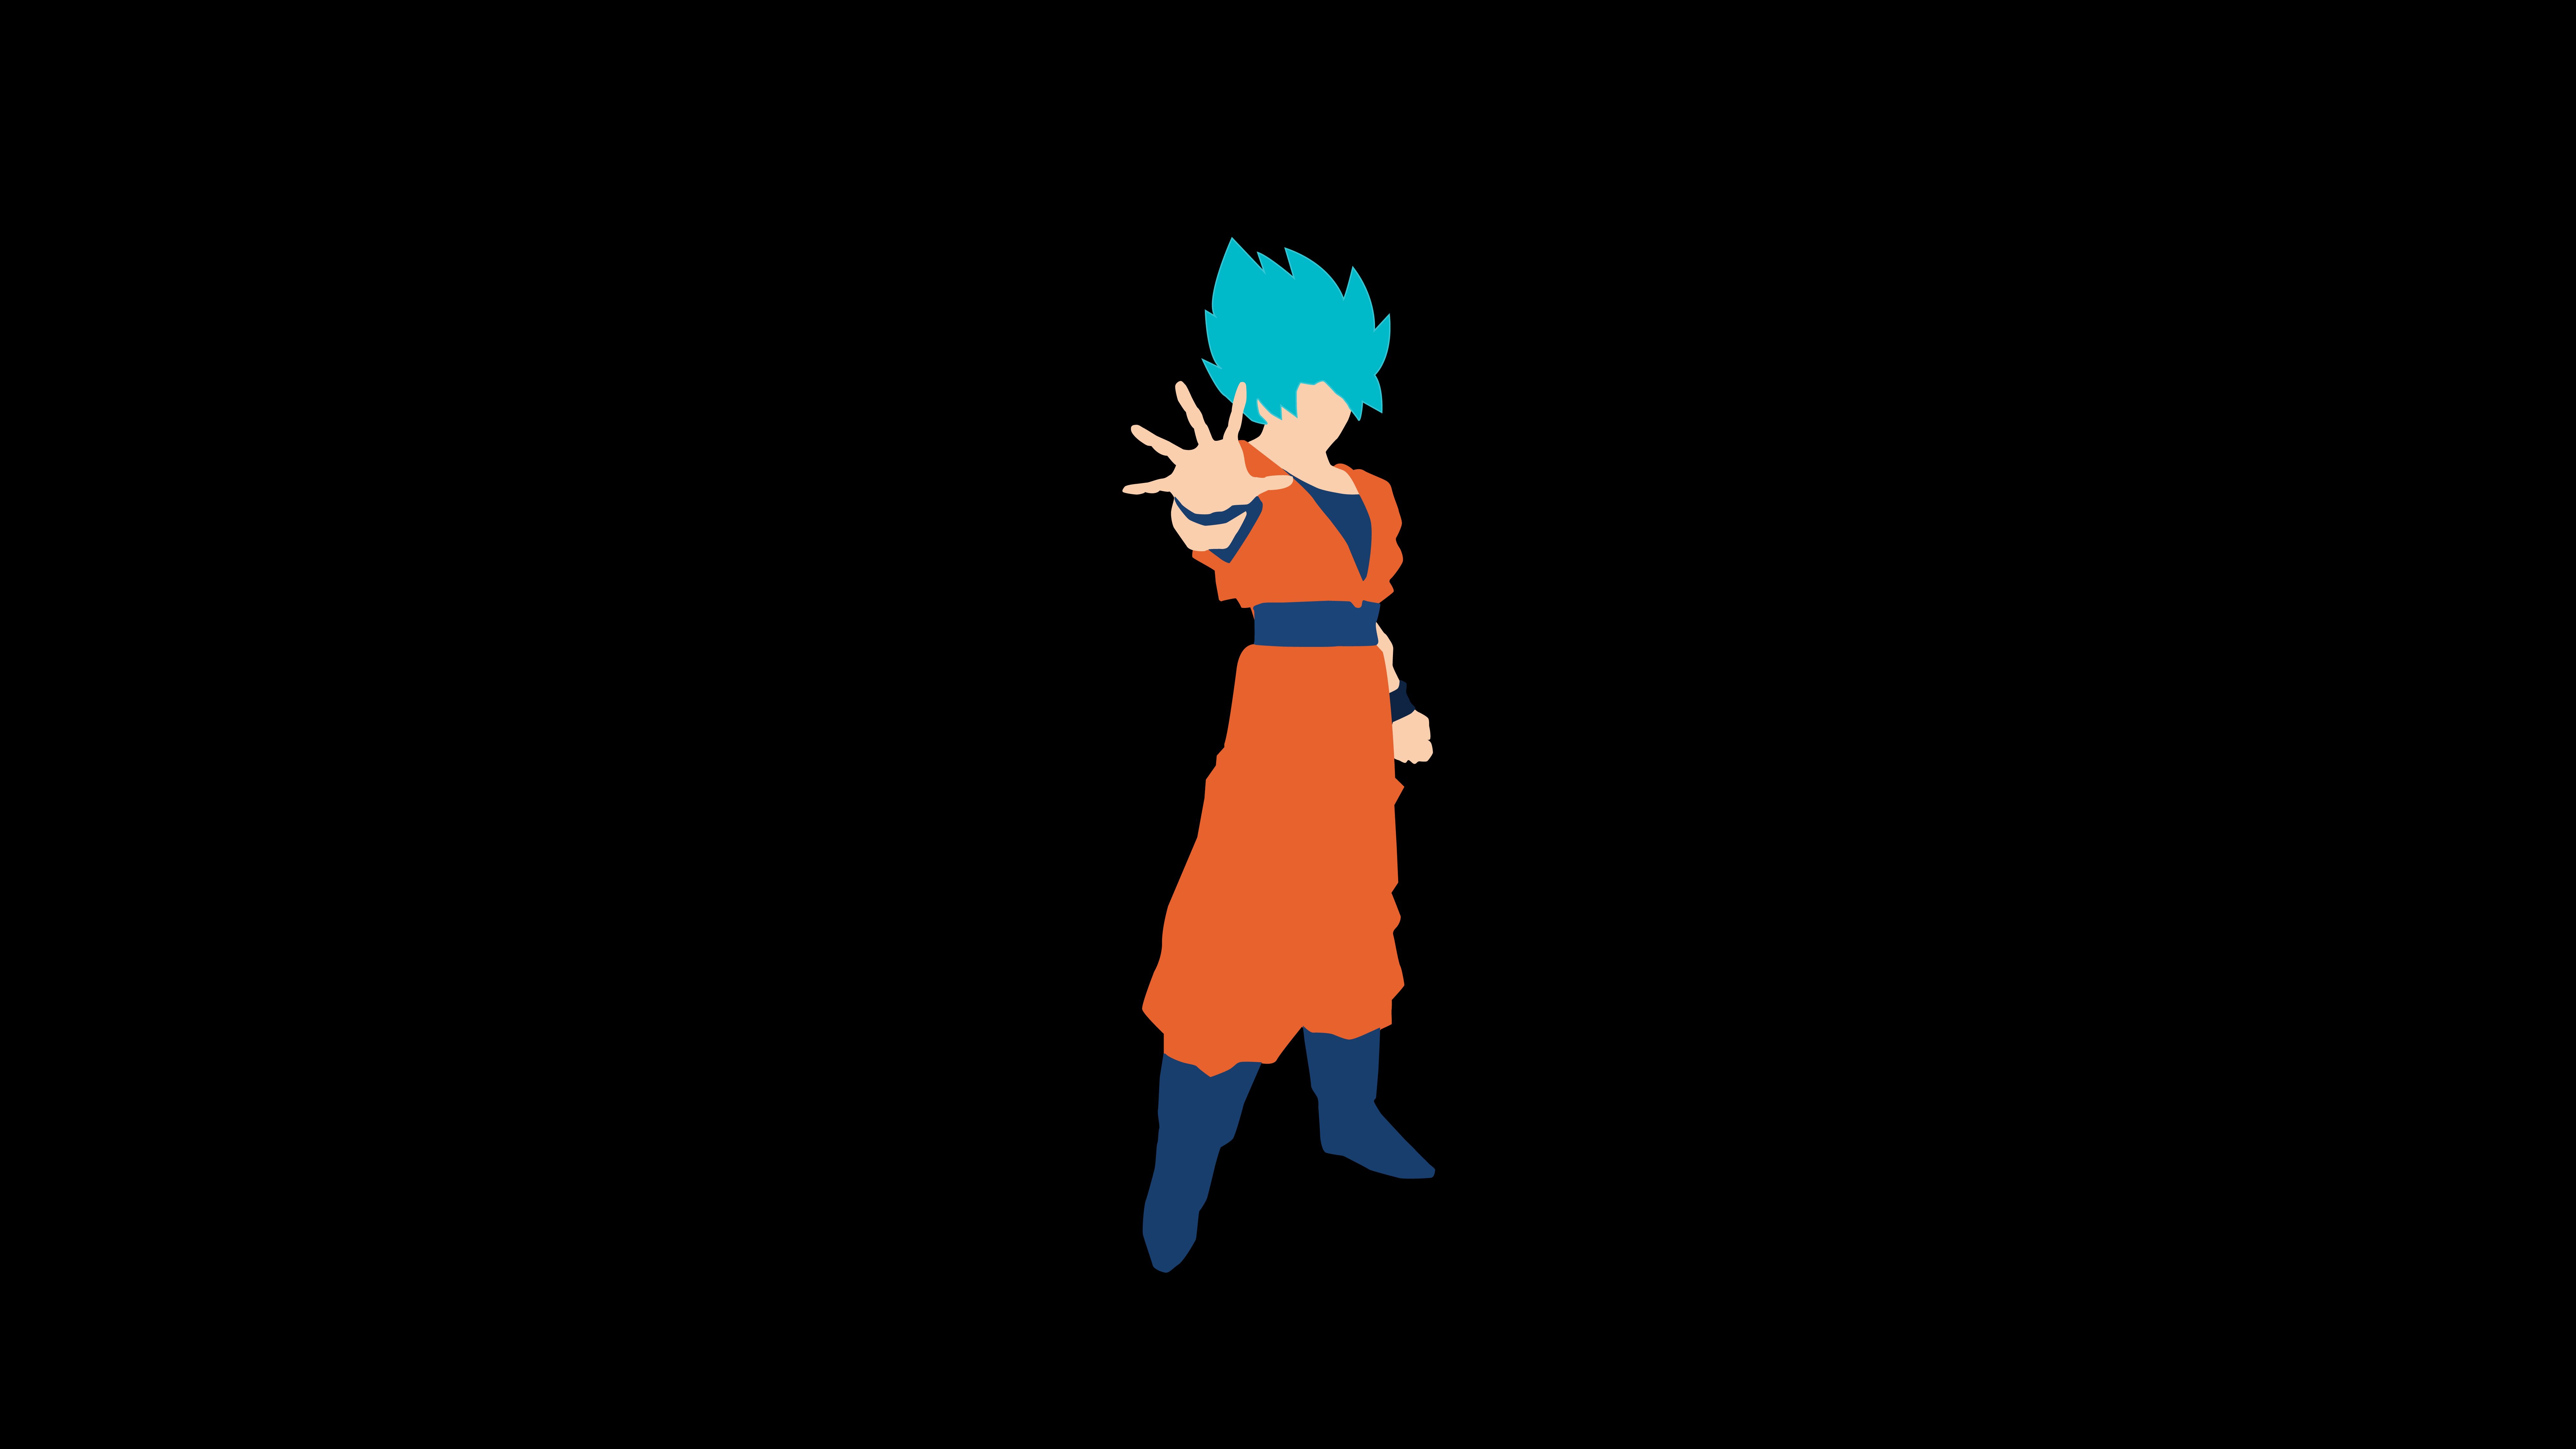 Goku Minimalism 8k, HD Superheroes, 4k Wallpaper, Image, Background, Photo and Picture